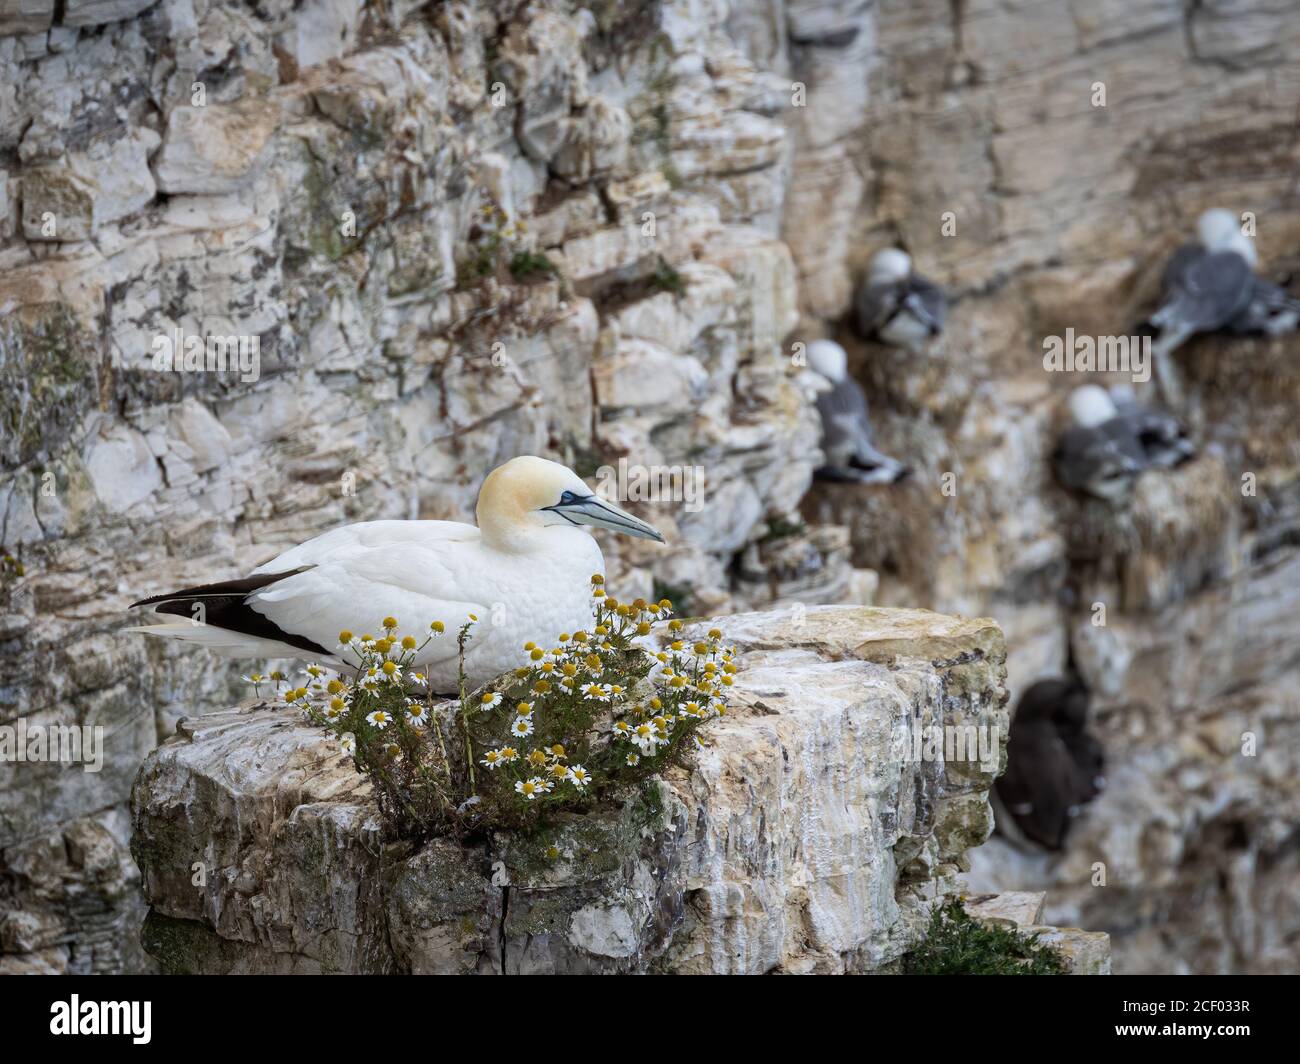 Northern Gannet on Nest at Cliffs Stock Photo